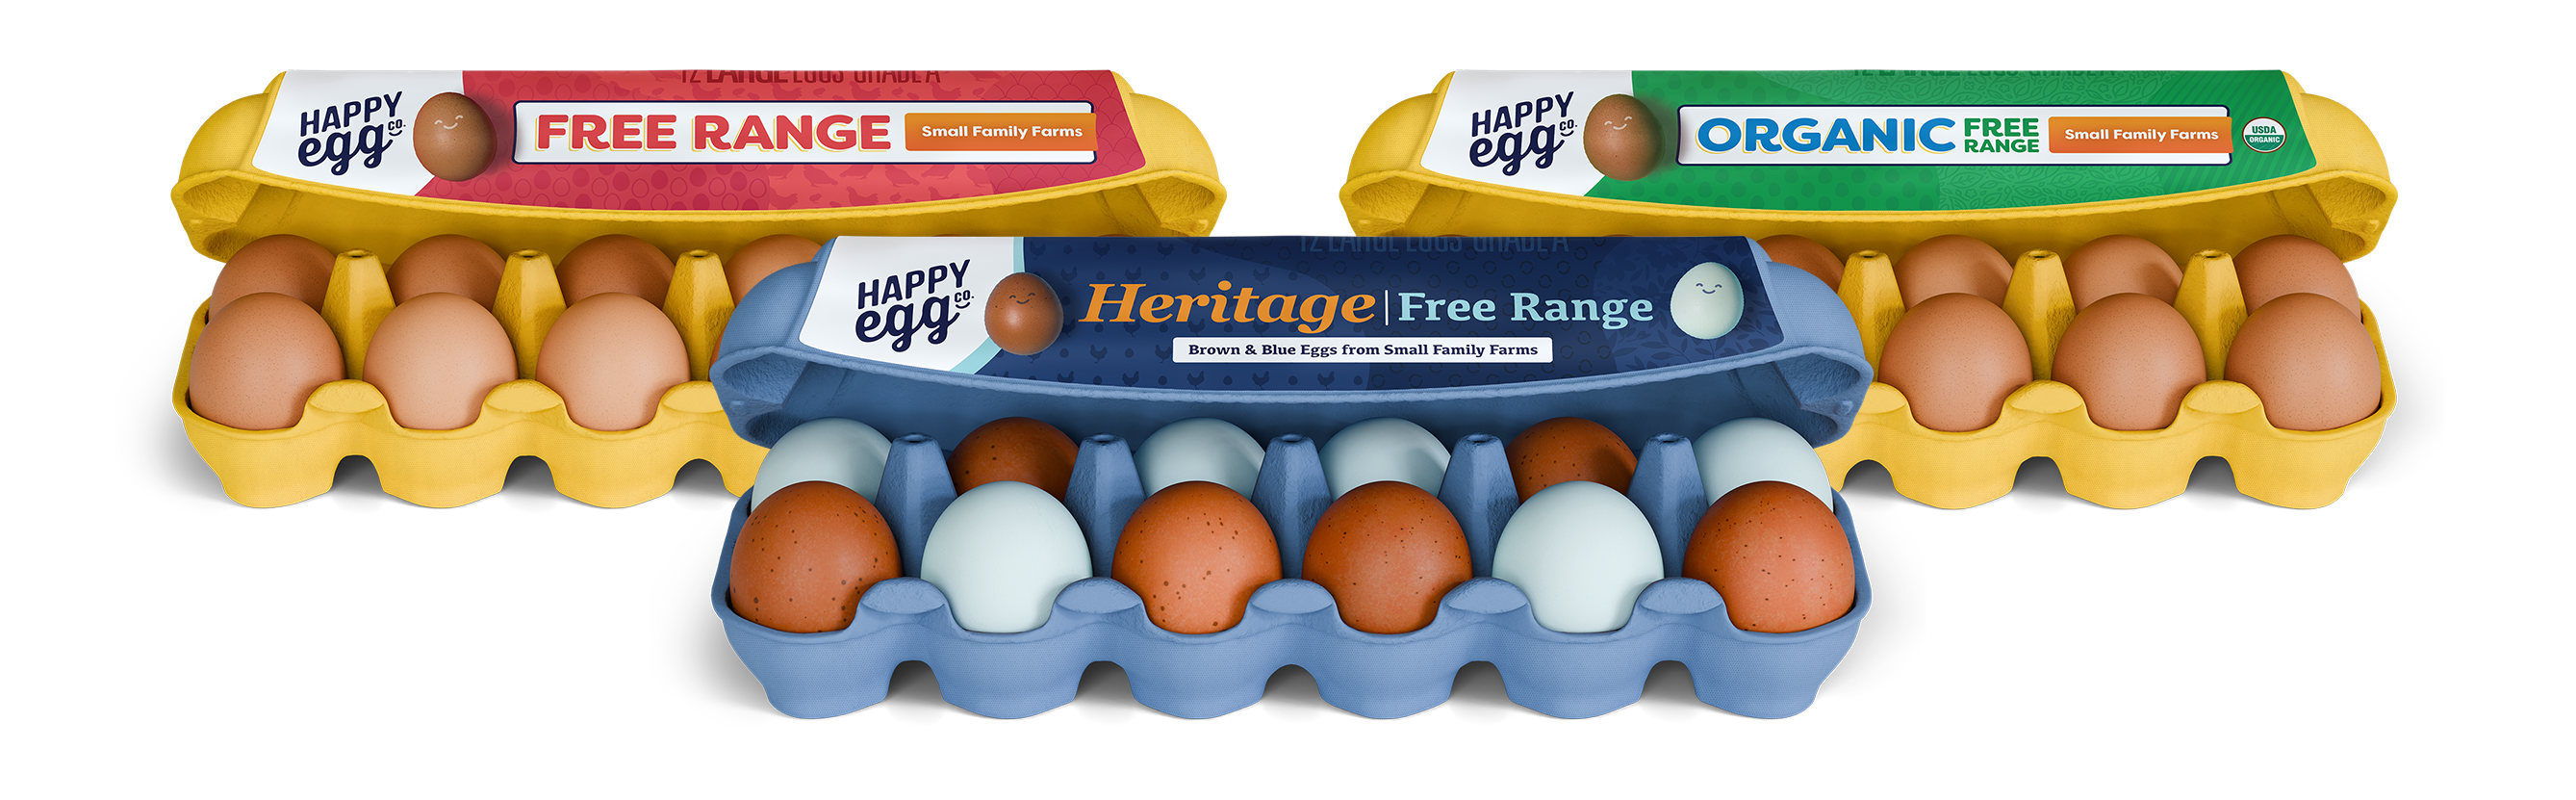 Happy Egg Cartons